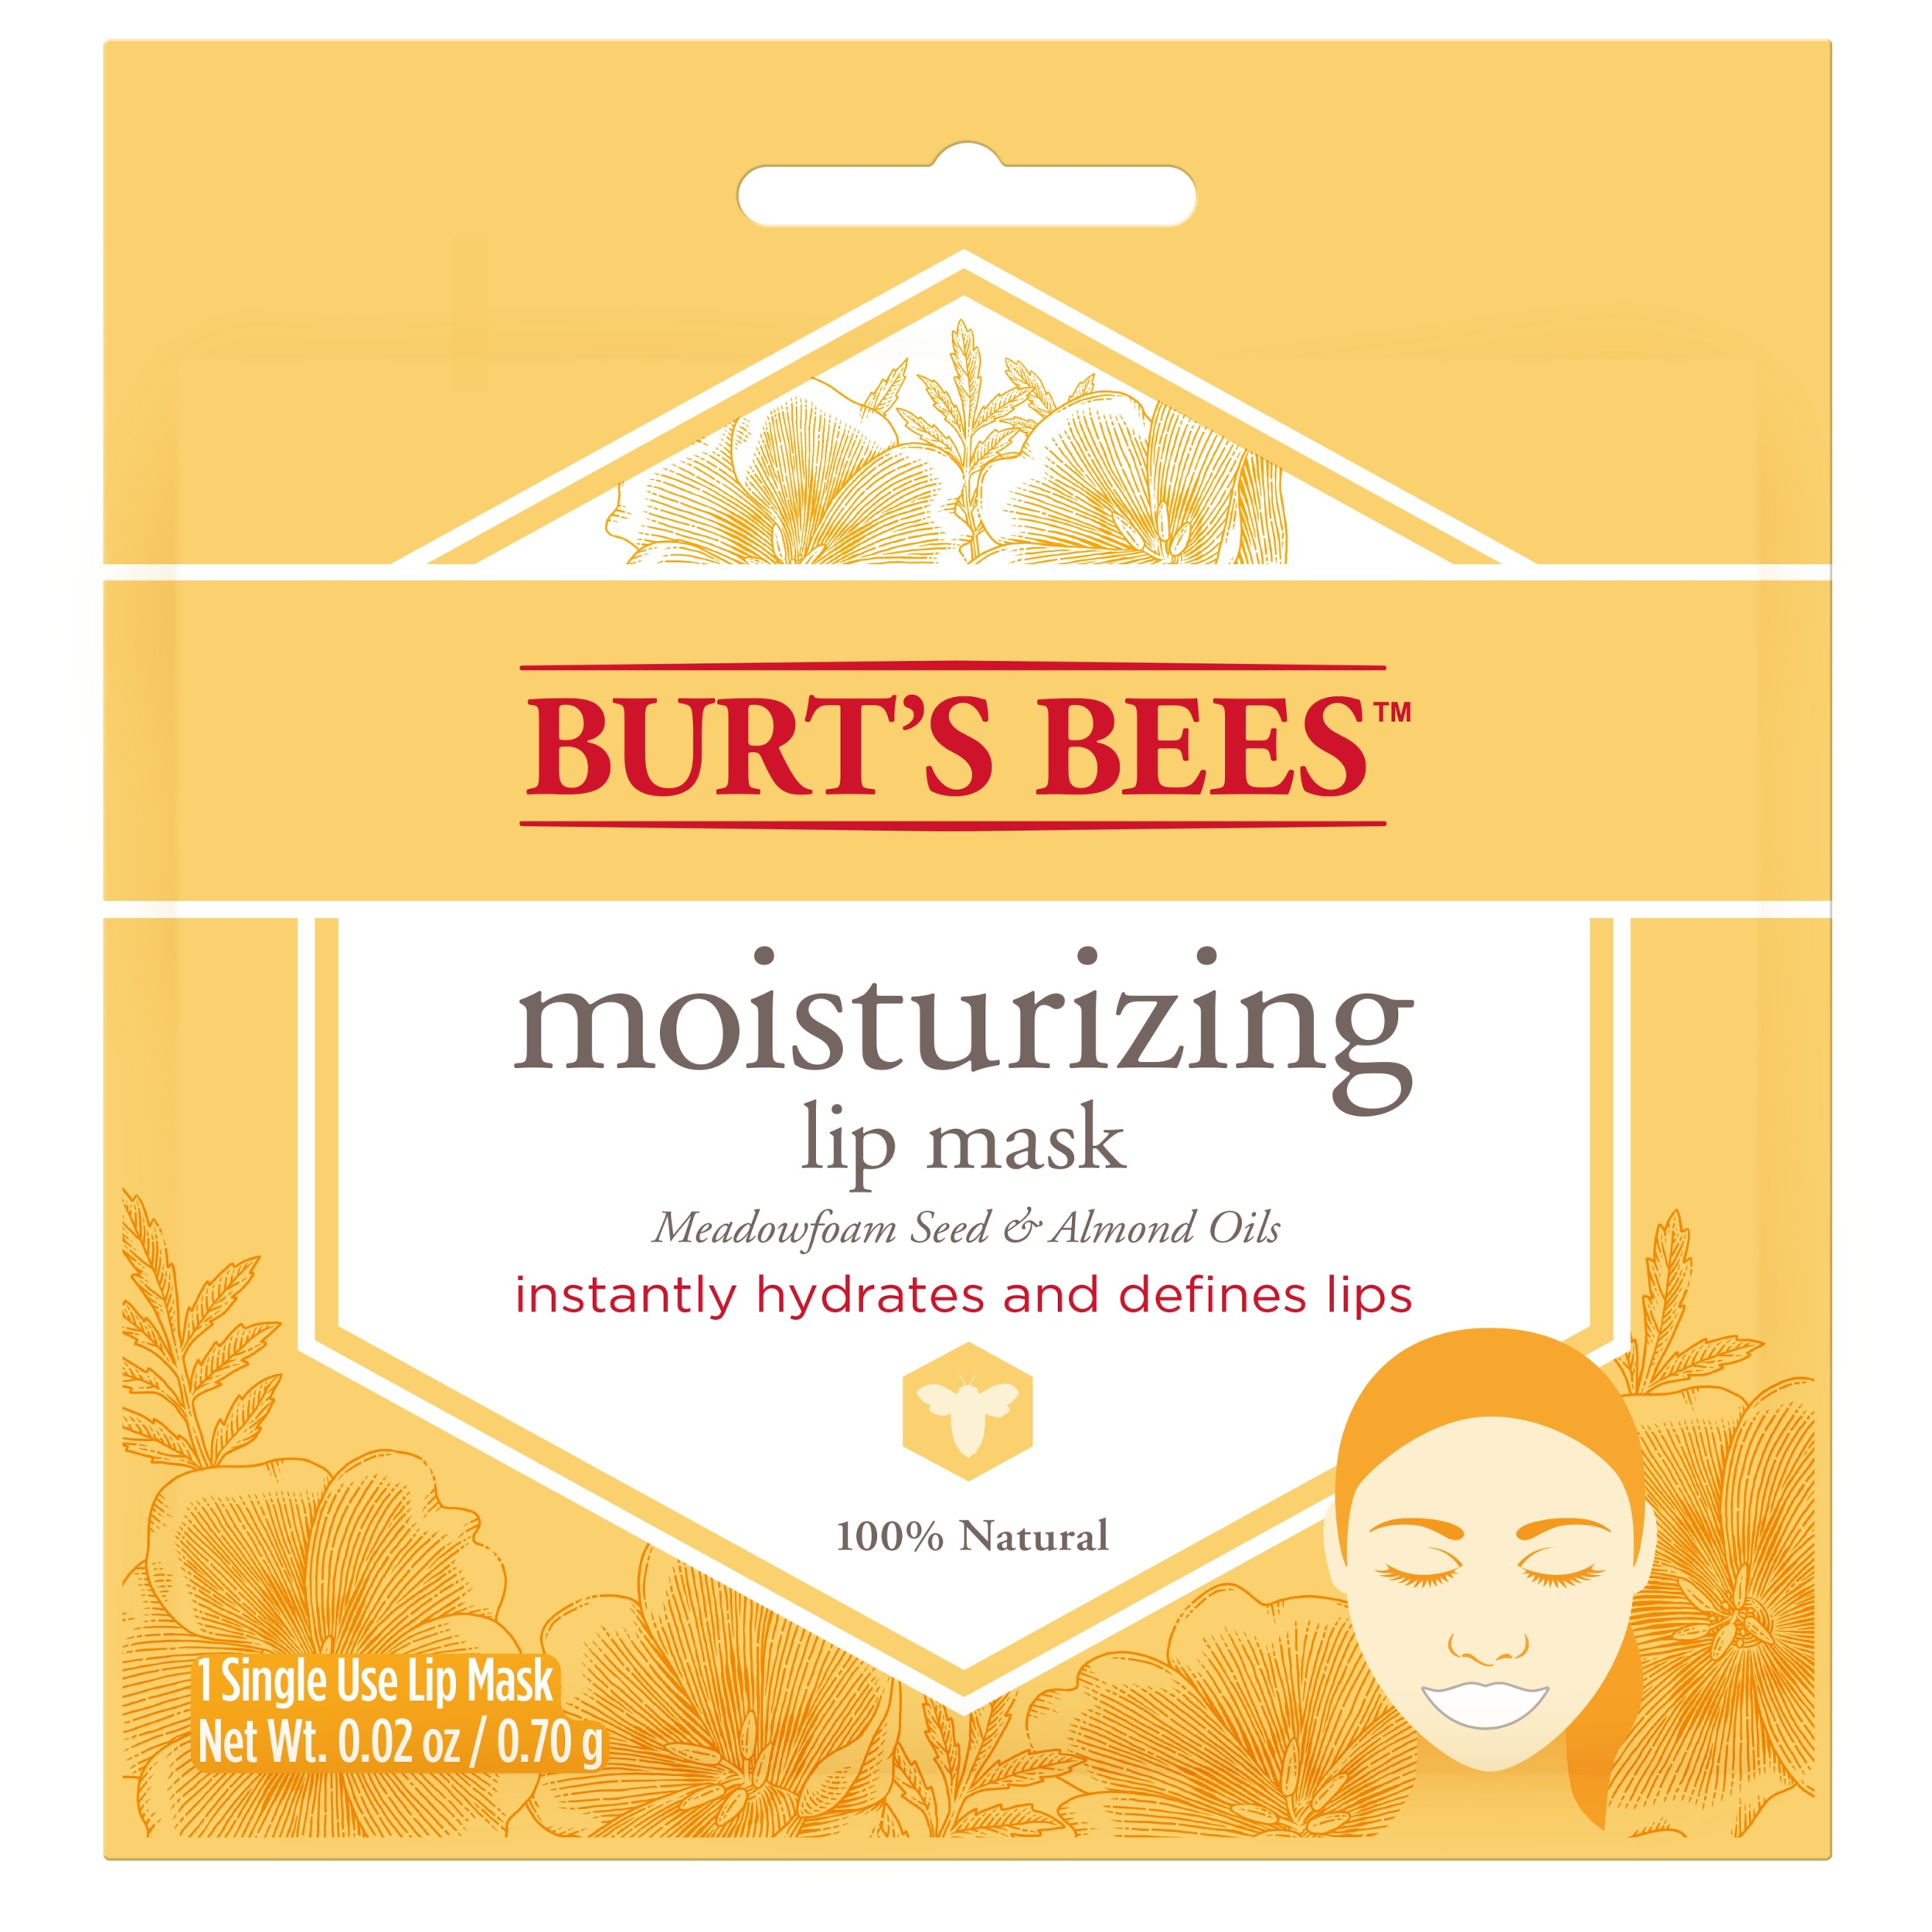 Burt's Bees 100% Natural Moisturizing Single Use Lip Mask, 1 Count - image 1 of 8